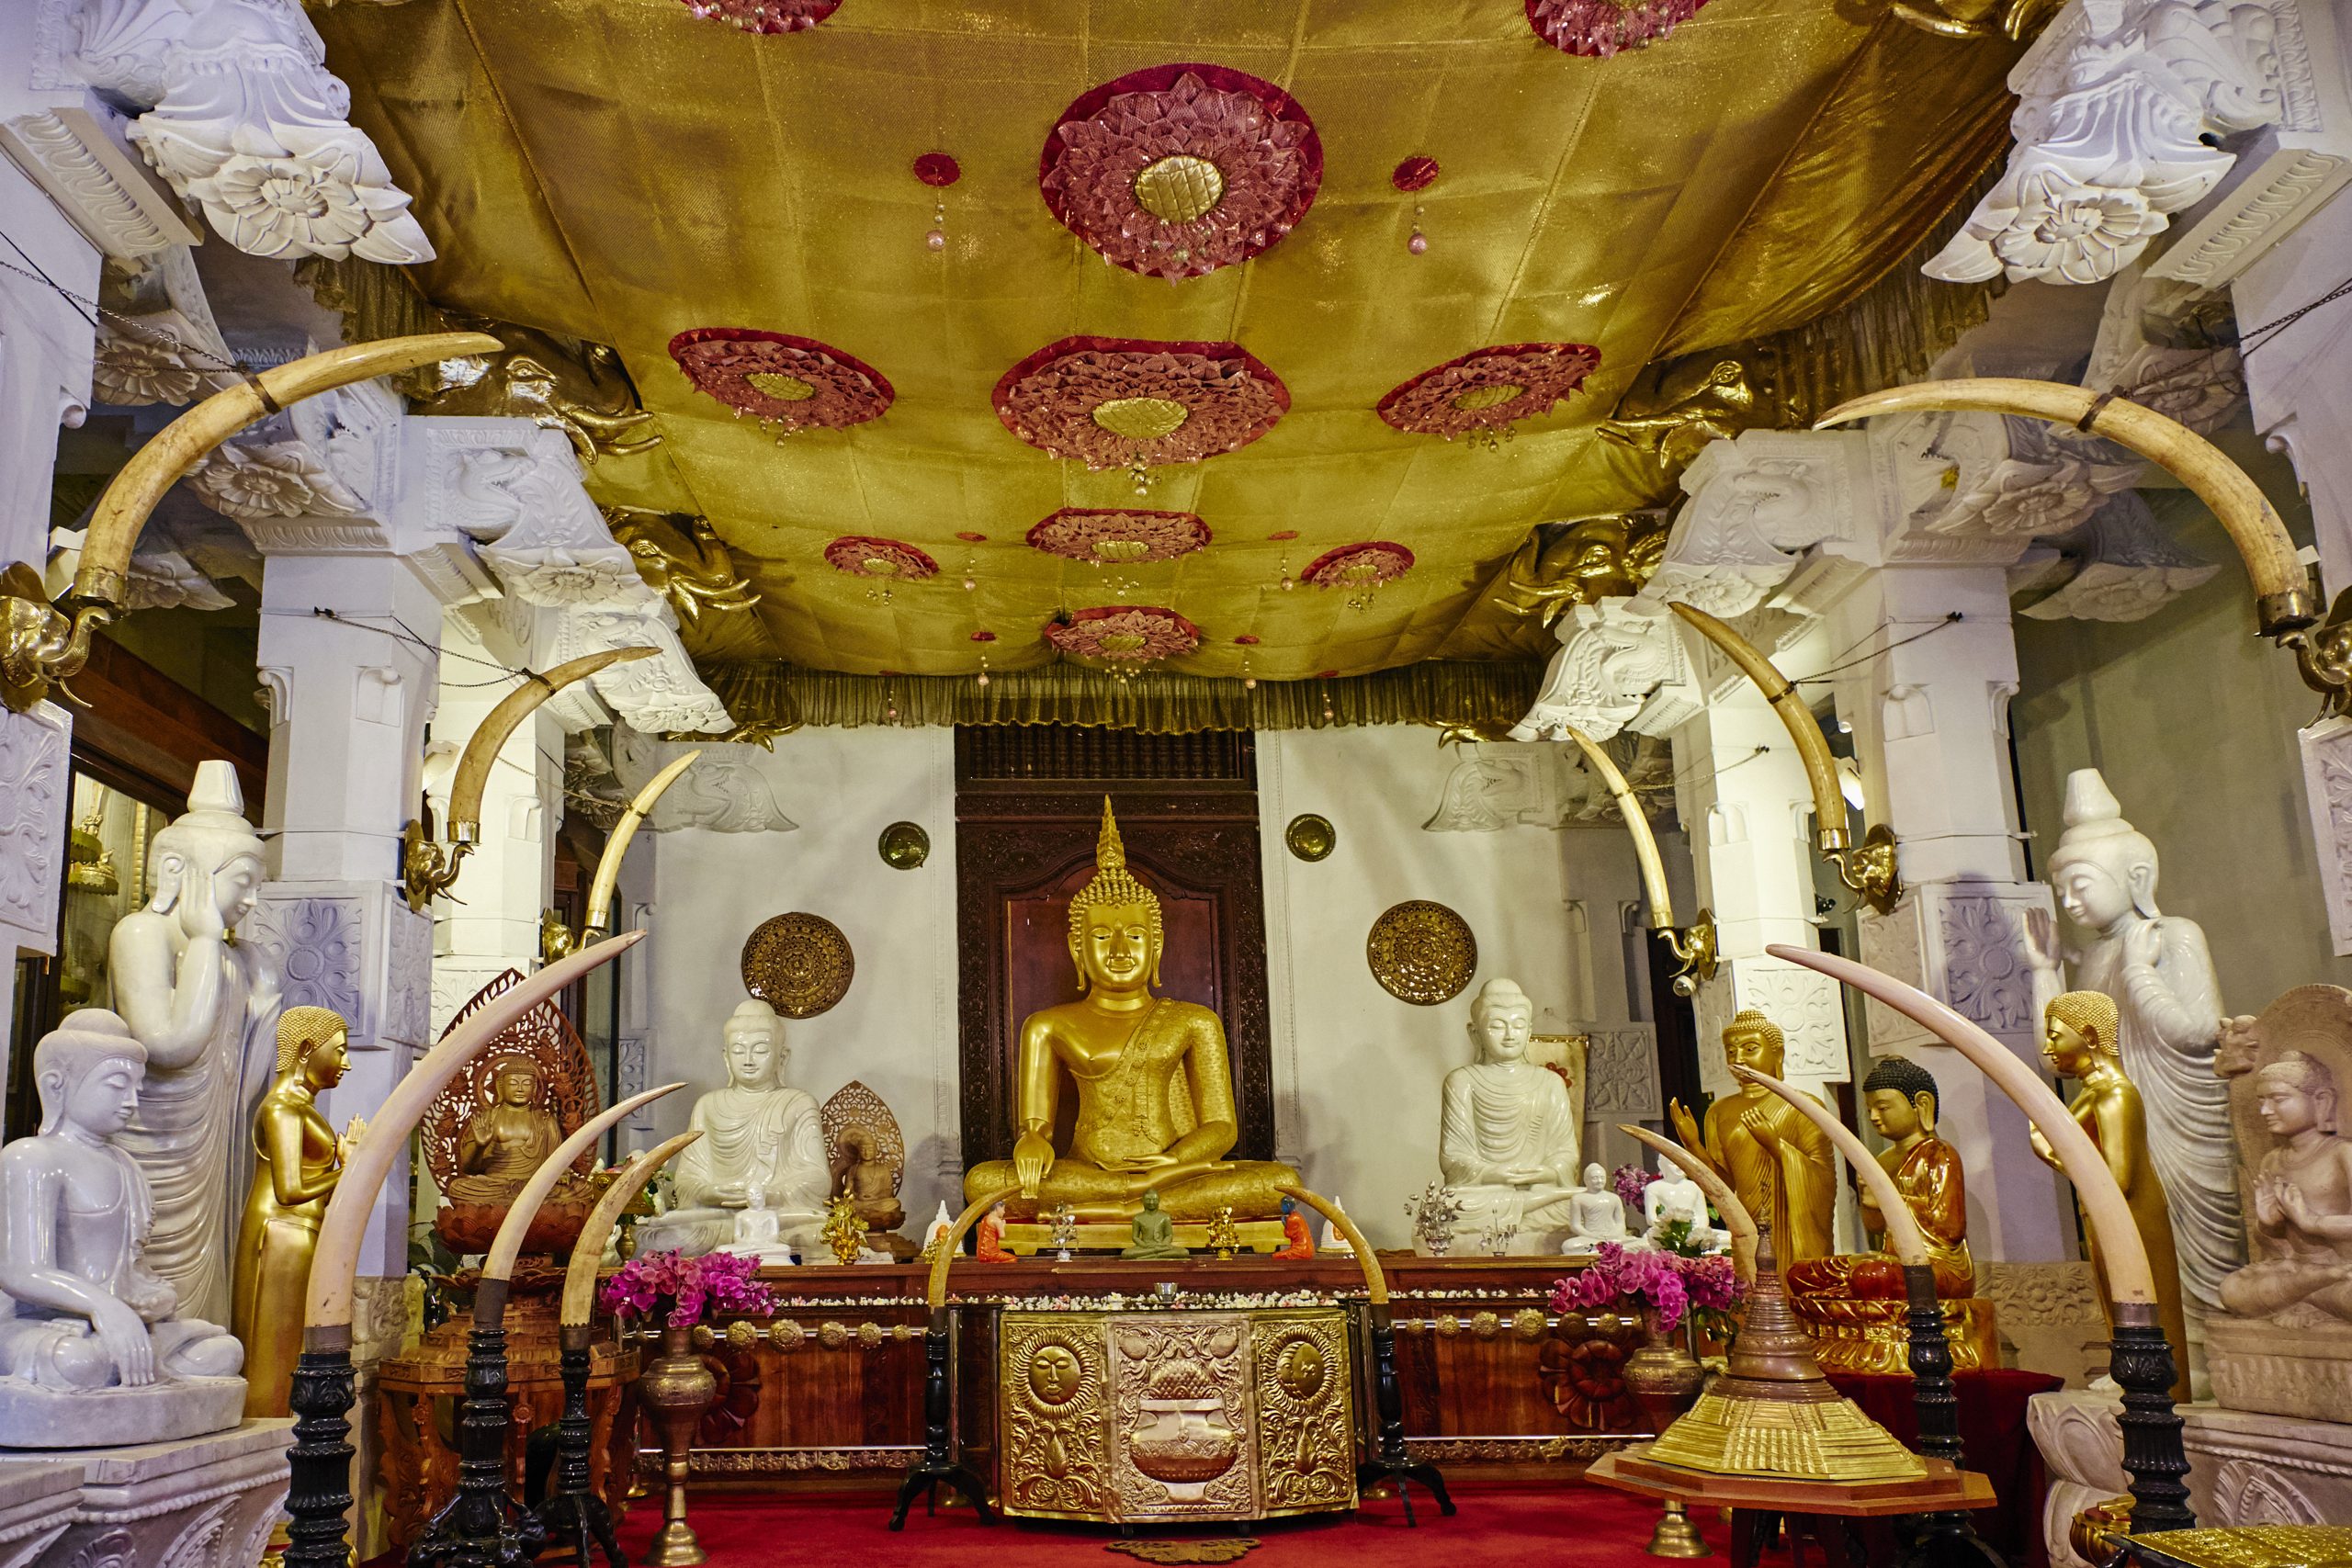 Sri Lanka, Kandy, Tooth's temple